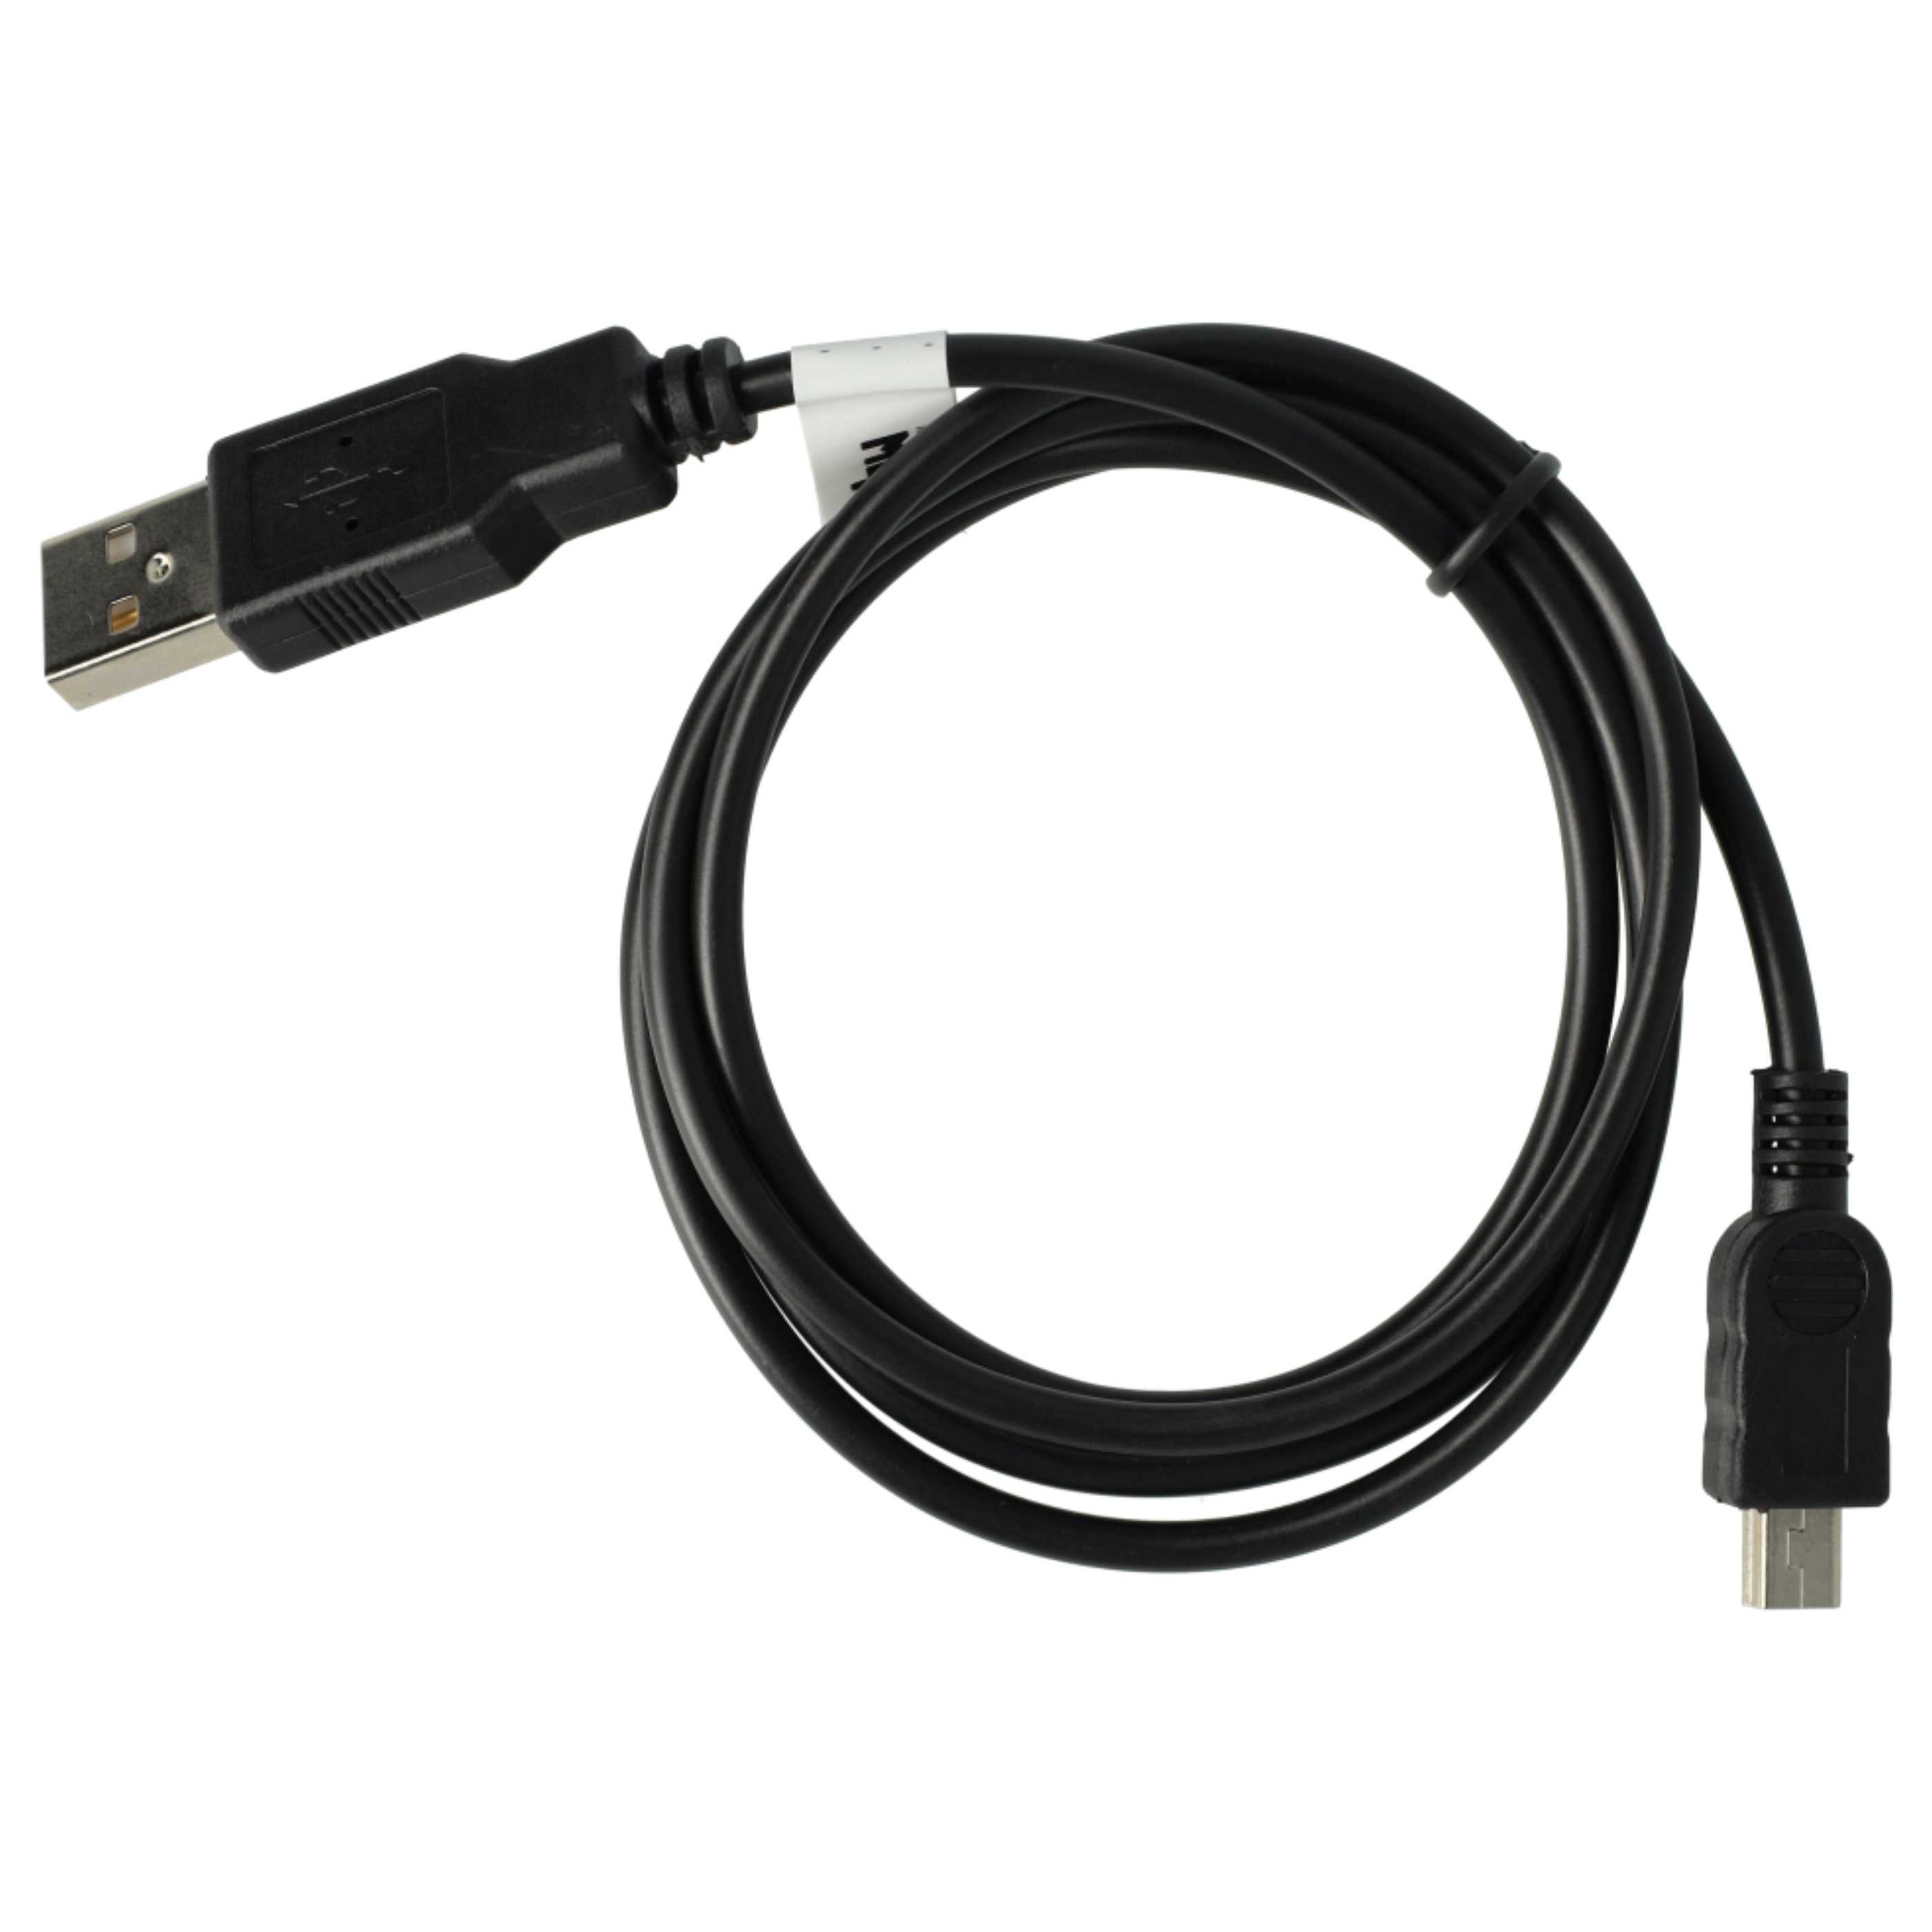 USB Datenkabel als Ersatz für Nikon UC-E15, UC-E3, UC-E4, UC-E5 für Kamera u.a. - 100 cm